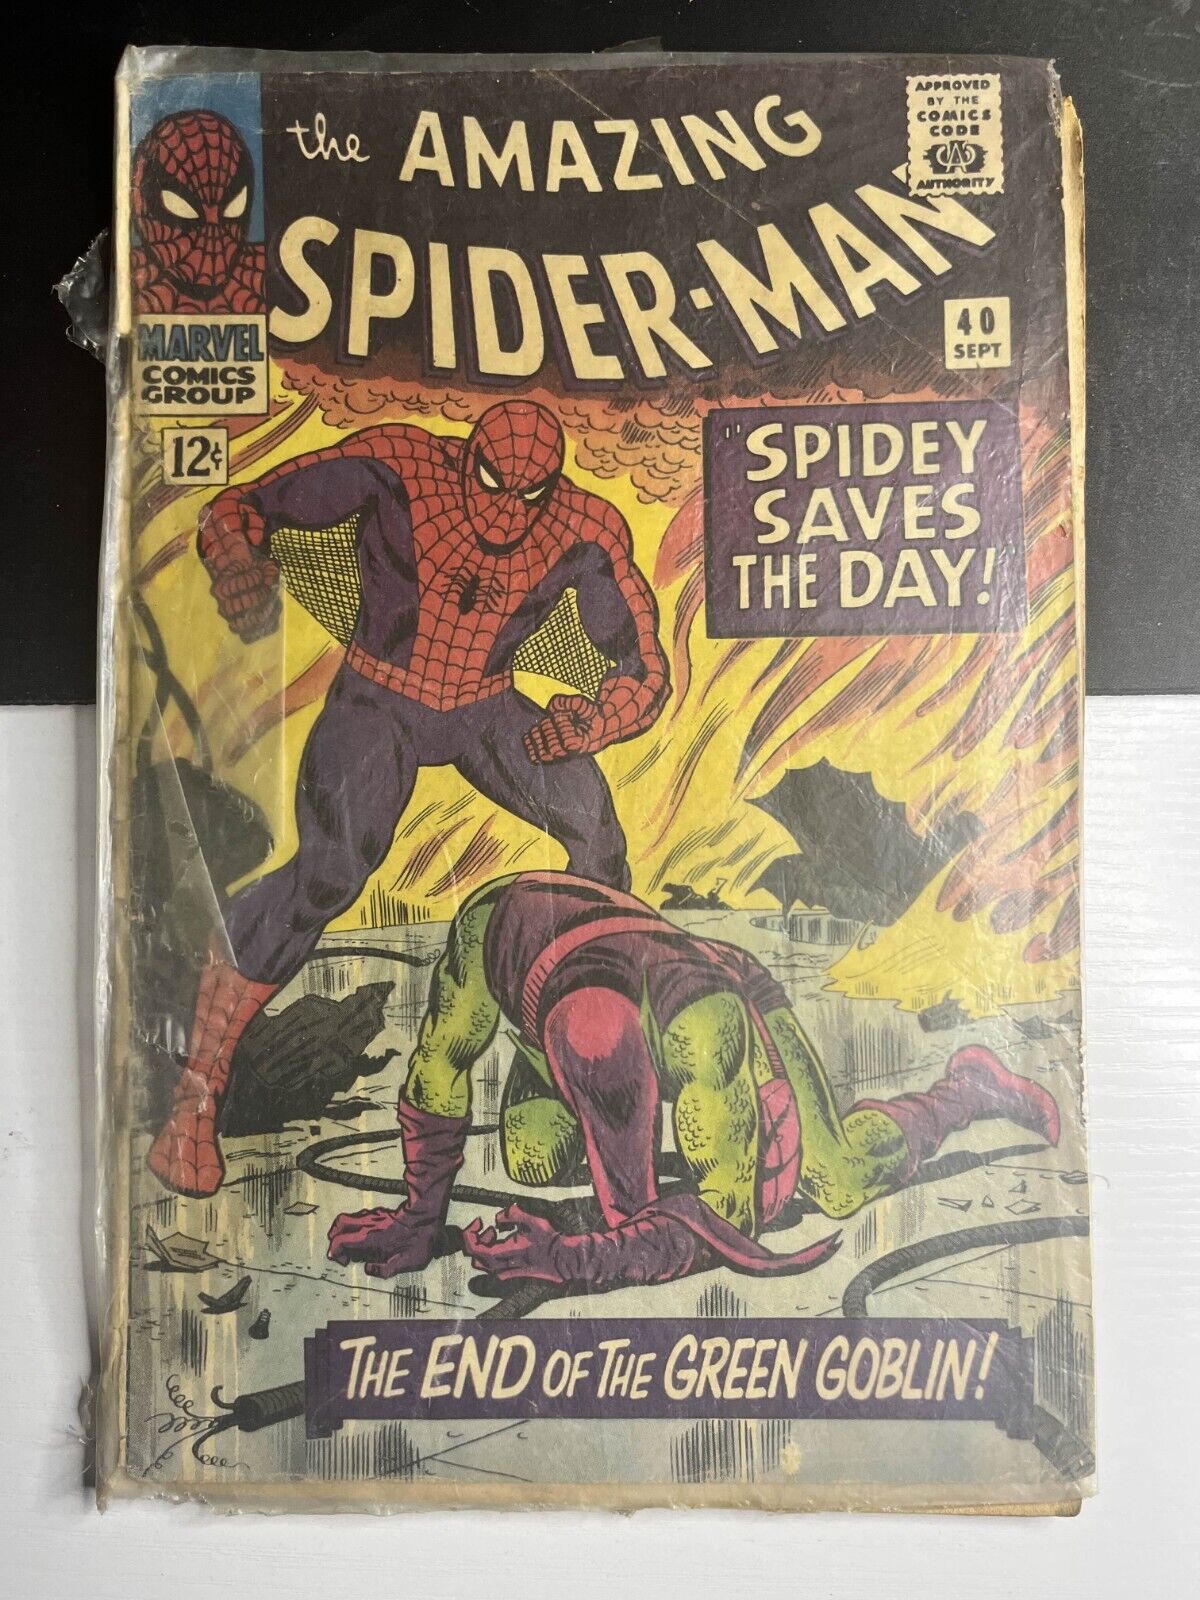 The Amazing Spider-Man #40 (1966) - Origin of Green Goblin